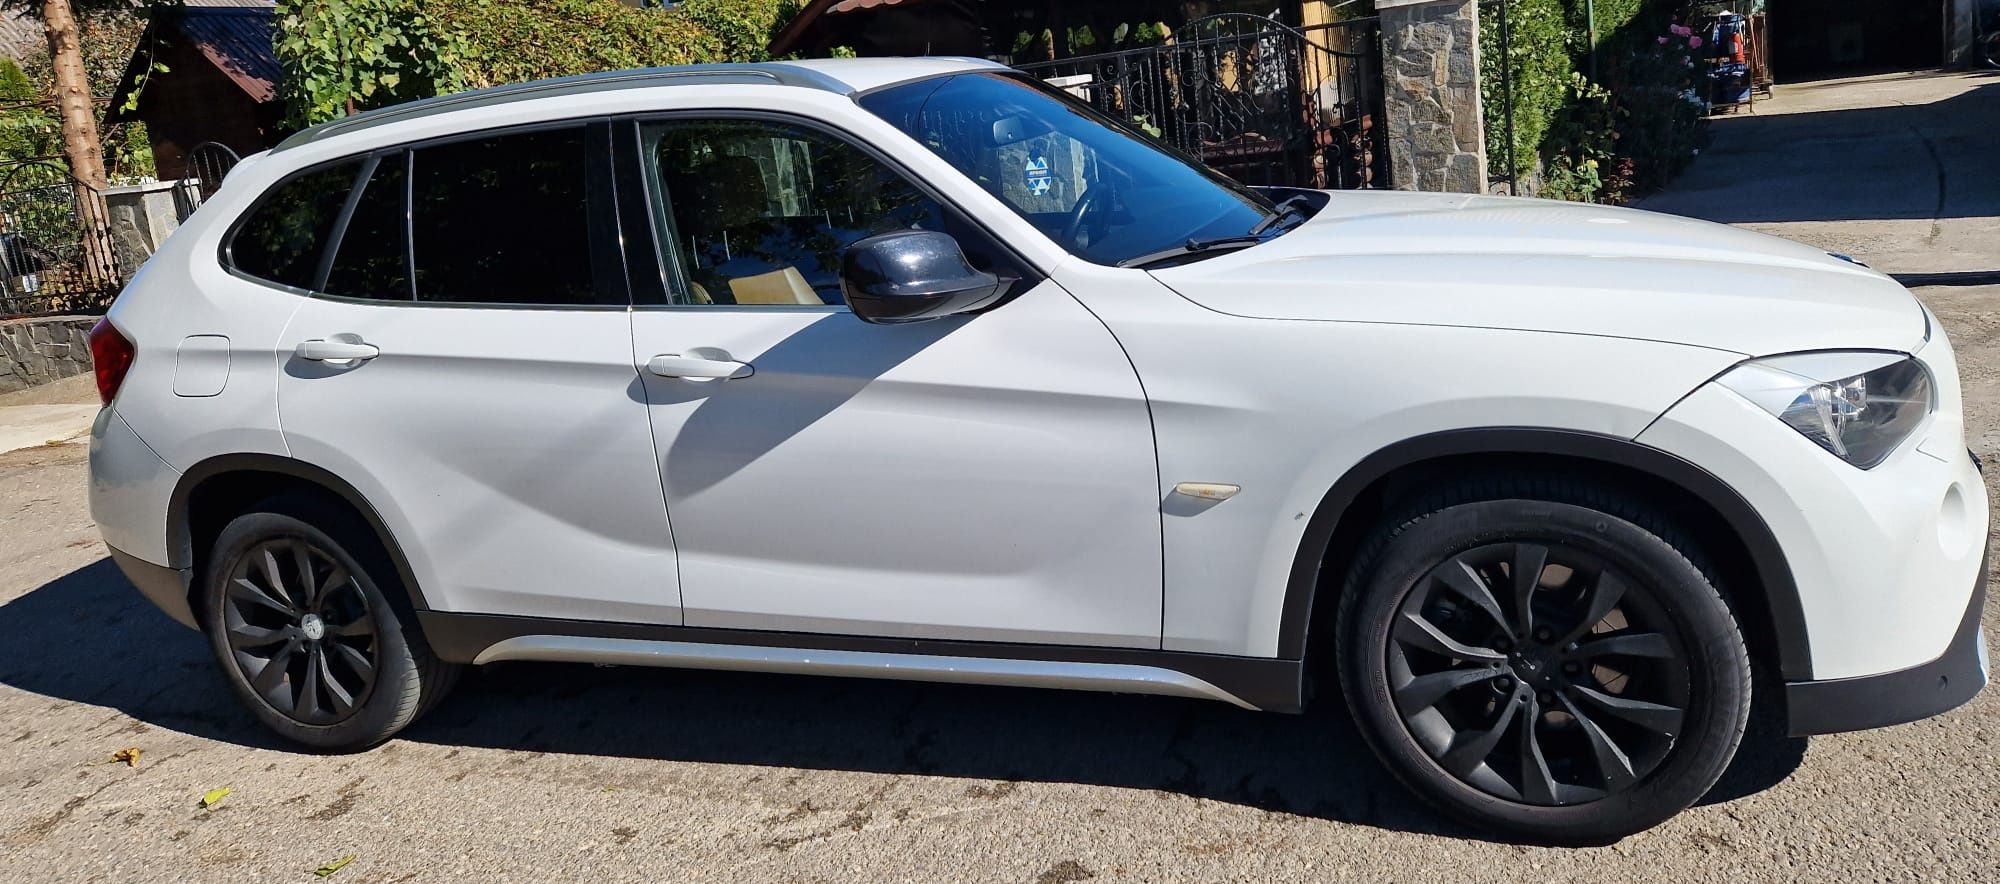 BMW X1 X-Drive Bi-turbo 2.0 Diesel 204hp IMPECABIL! Accept orice test